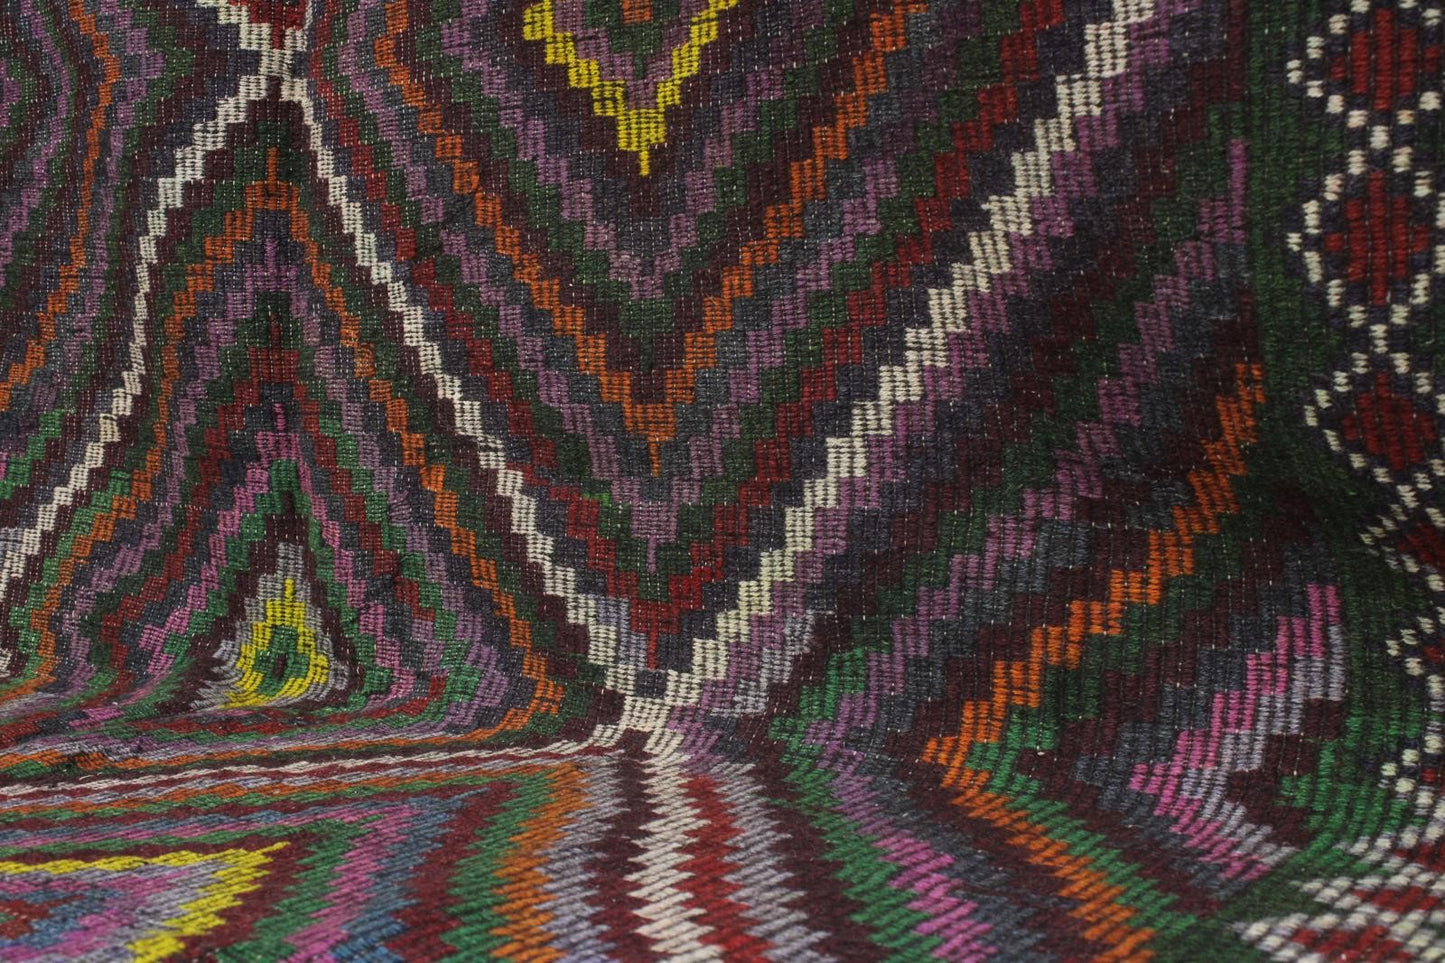 Kelim Vintage carpet, size 135x80 cm, 50 years